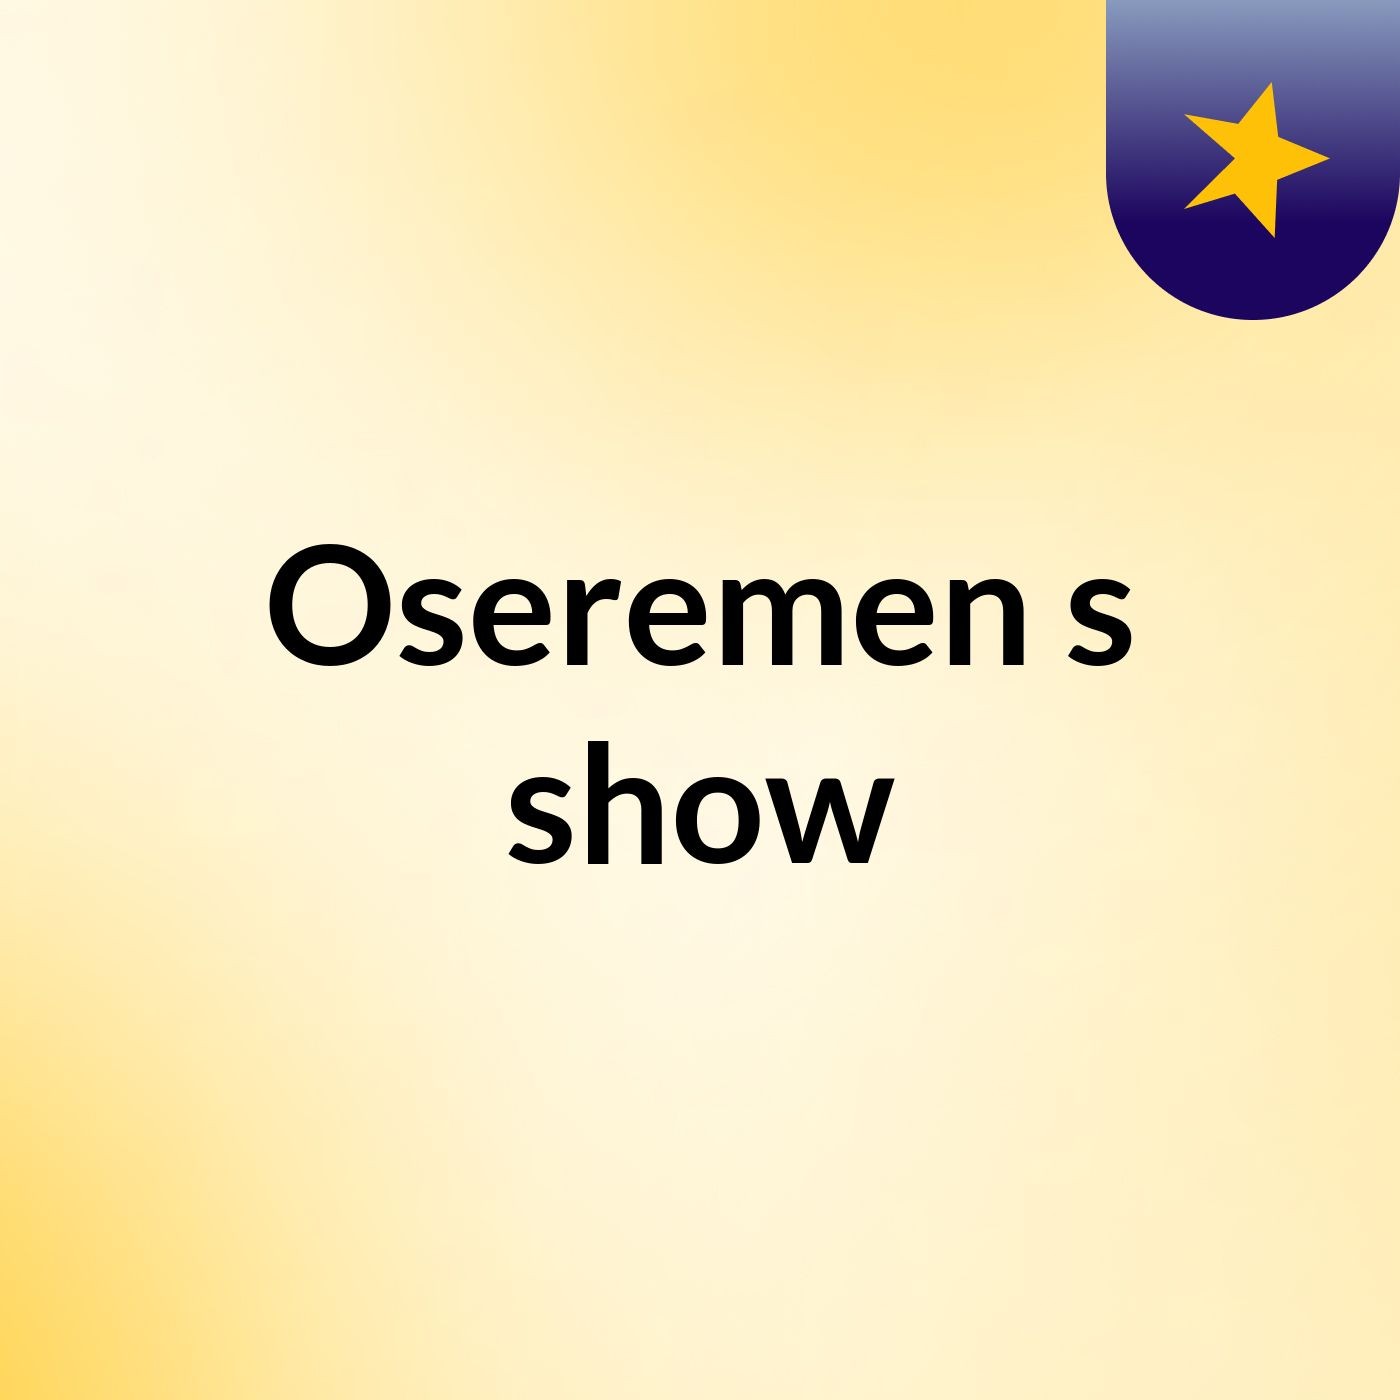 Oseremen's show